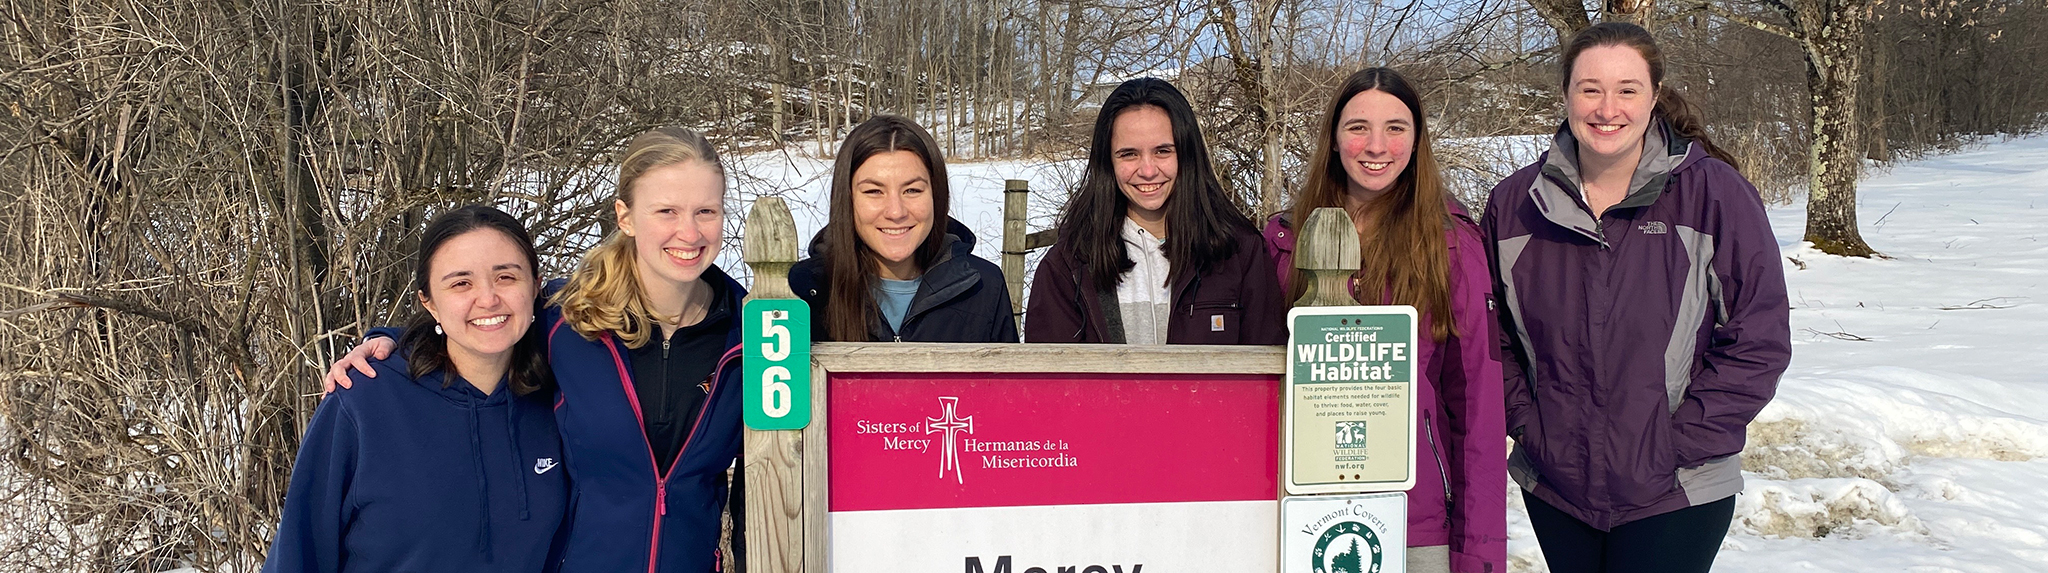 SJC students volunteer at Mercy Farm in Vermont during spring break March 2022.